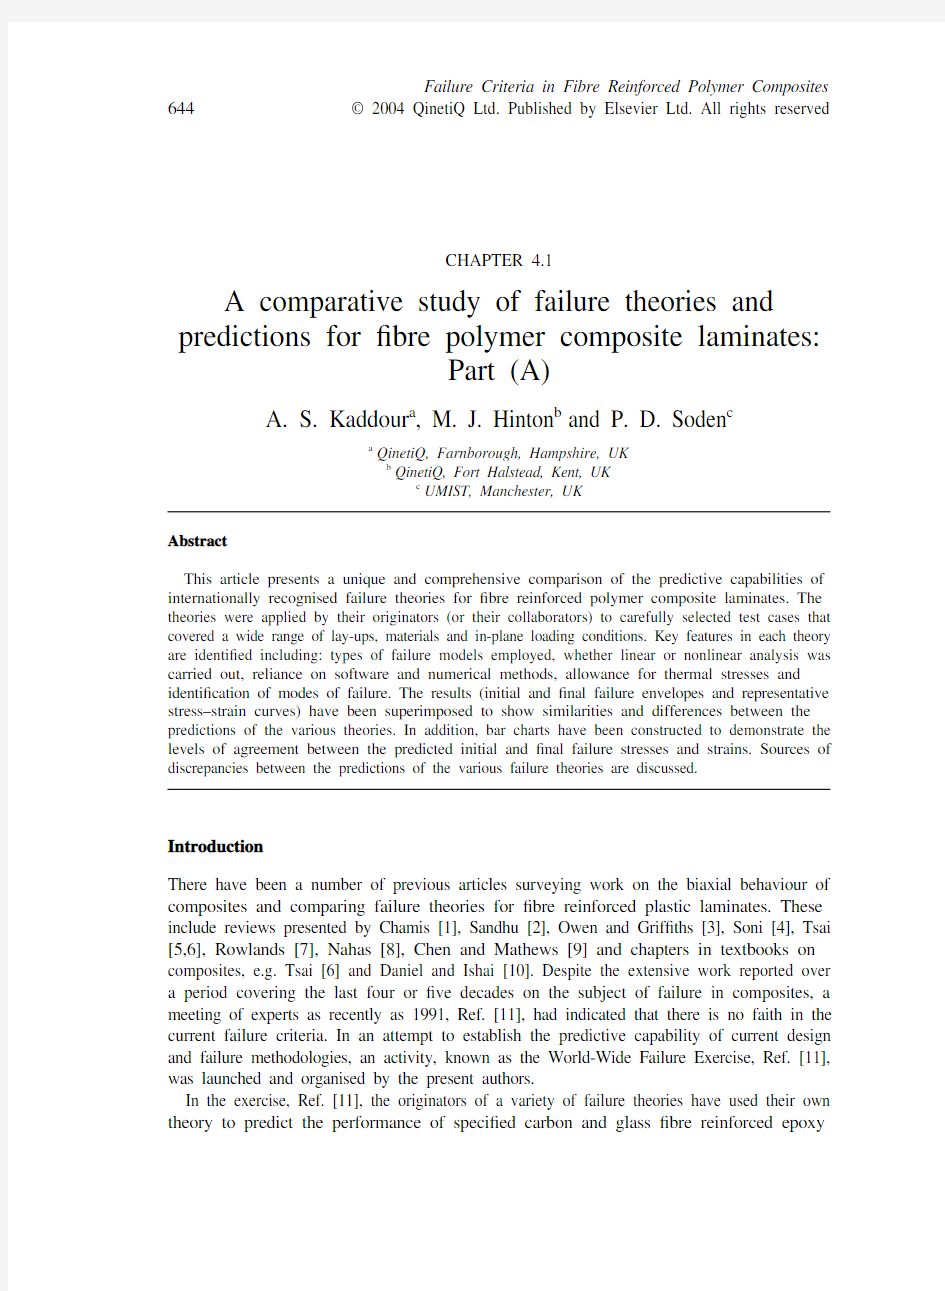 A comparative study of failure theories  for fibre polymer composite laminatesPart (A),